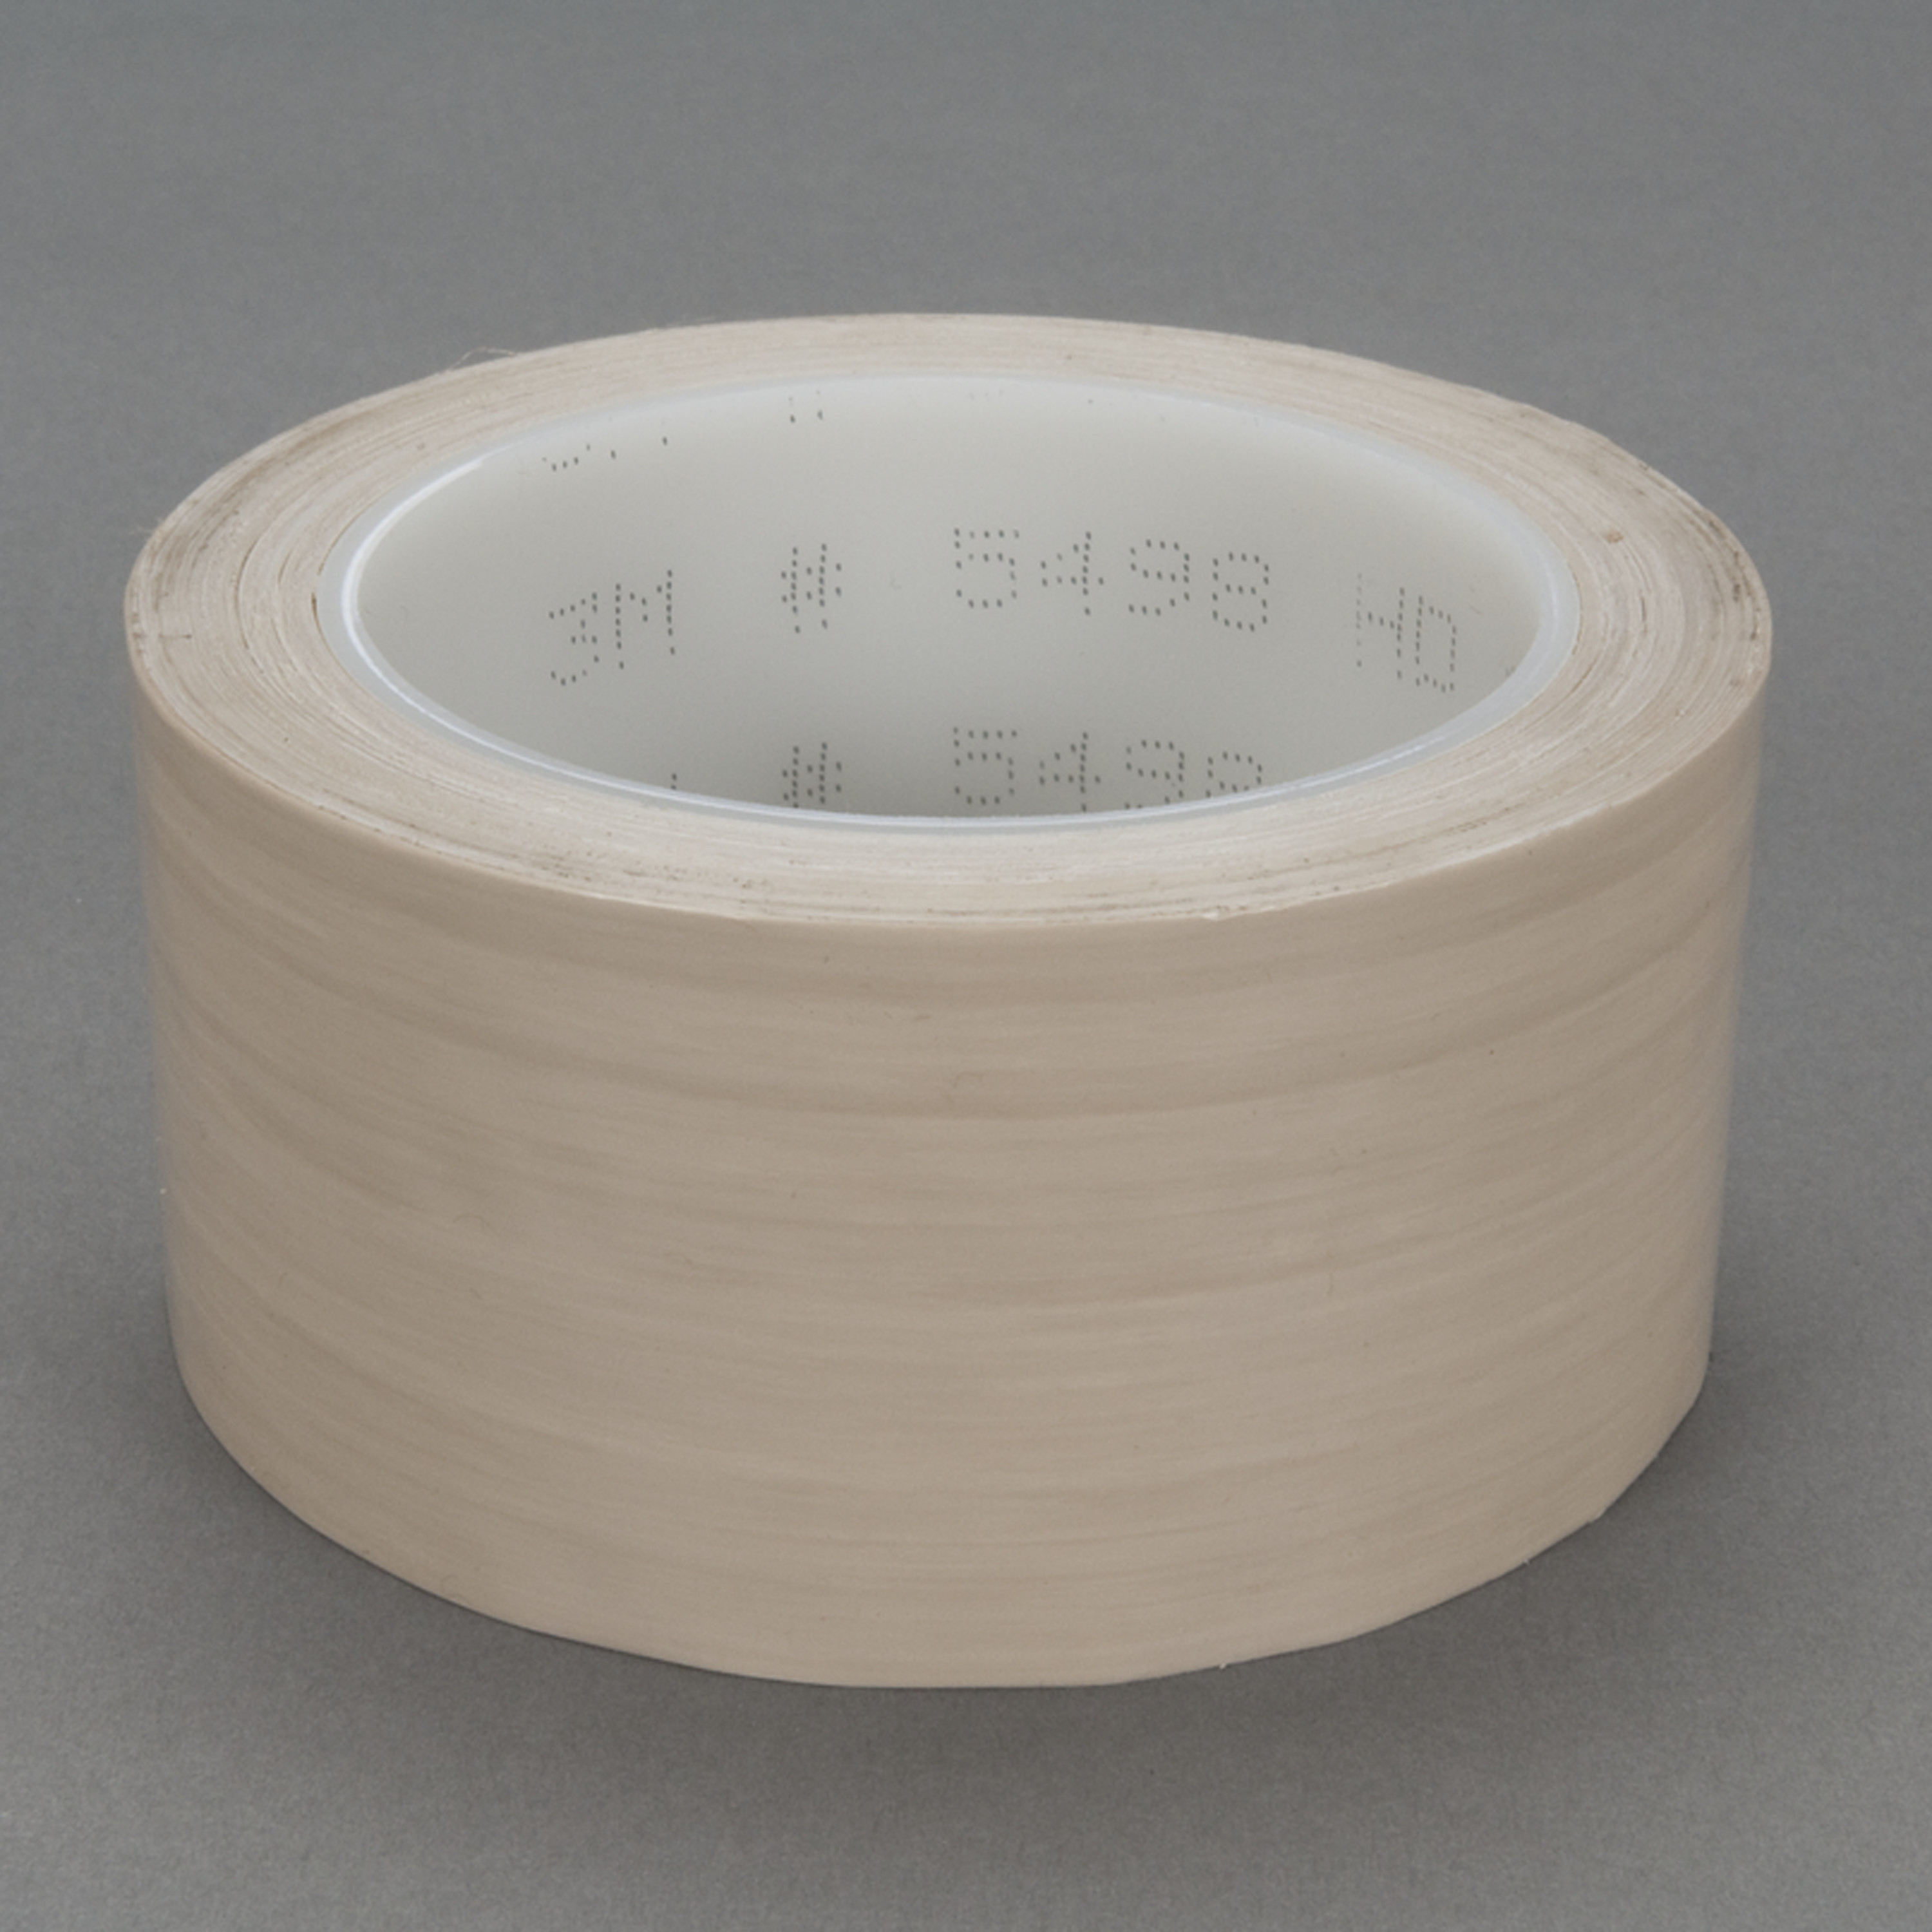 3M™ PTFE Film Tape 5498, Beige, 1 1/2 in x 36 yd, 4.2 mil, 6 rolls per
case